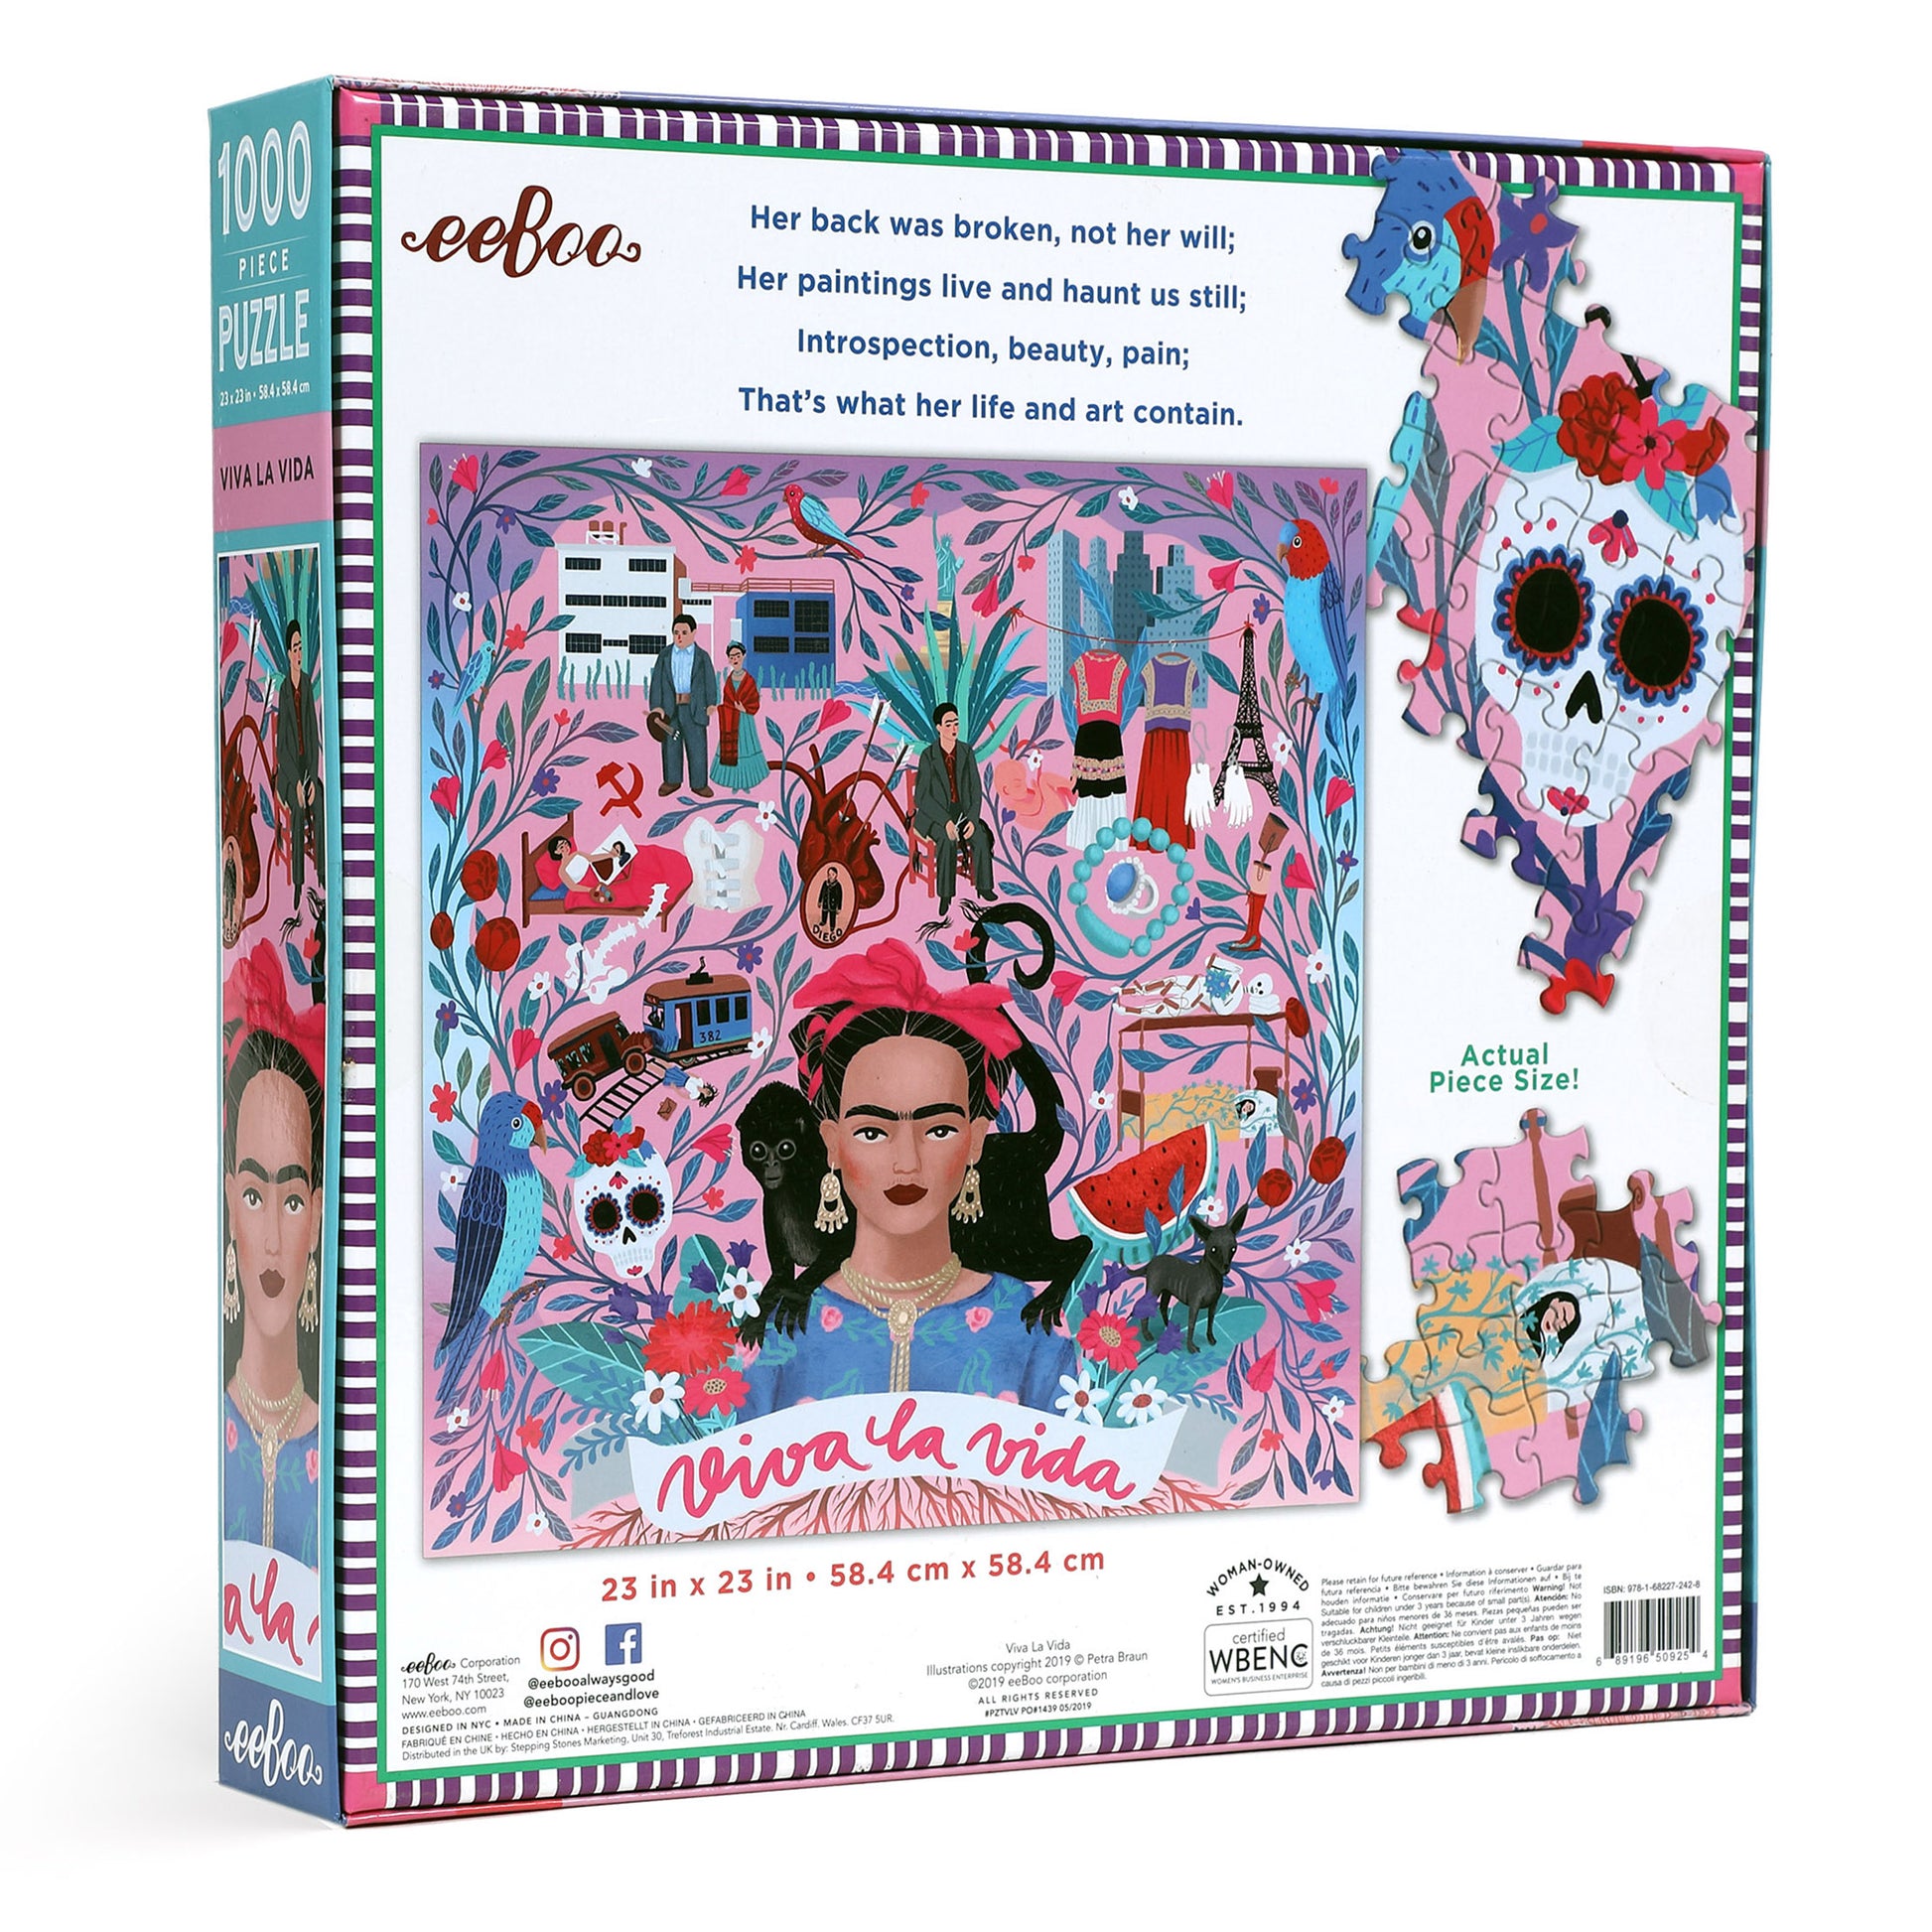 Viva la Vida Spanish Artist Frida Kahlo Mexico 1000 Piece Jigsaw Puzzle eeBoo Piece & Love Gifts for Artists